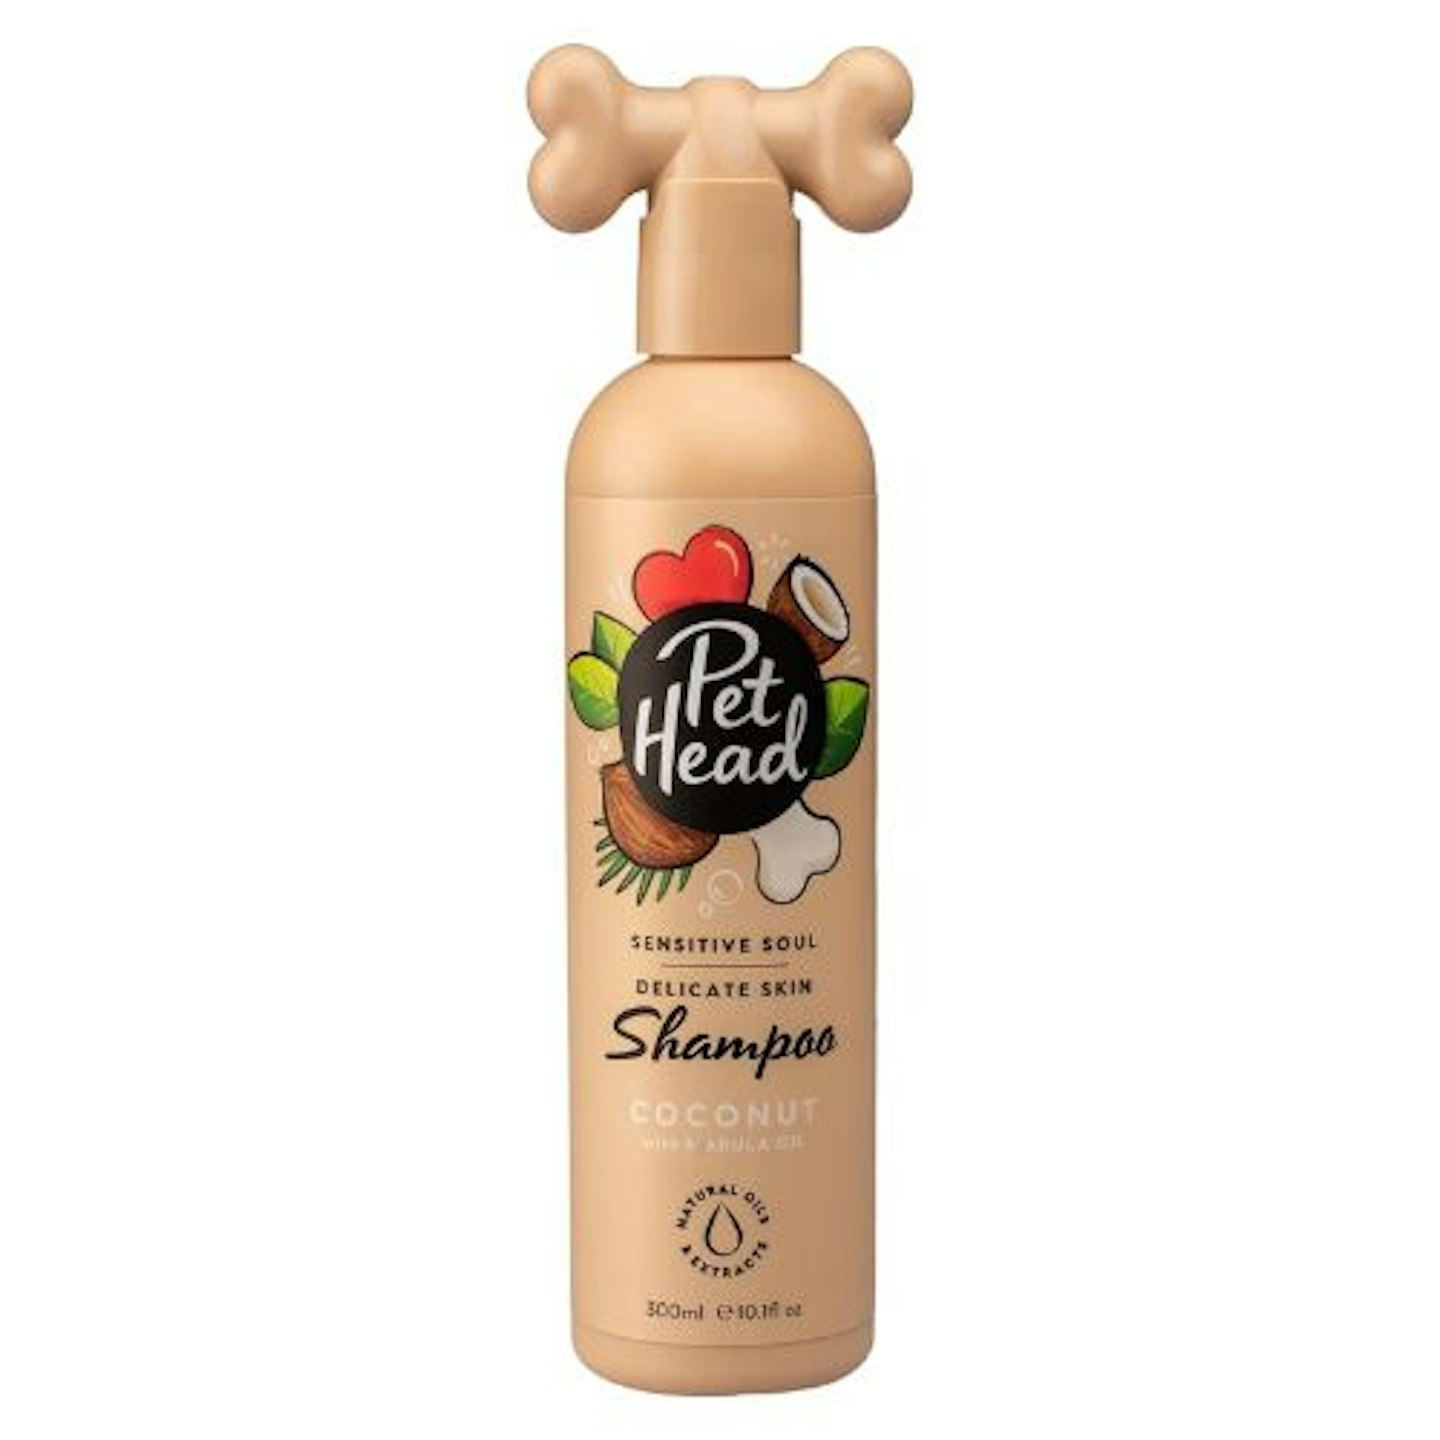 PET HEAD Dog Shampoo 300ml, Sensitive Soul, Coconut Scent, Shampoo for Dogs with Sensitive Skin, Professional Grooming, Vegan Pet Shampoo, Hypoallergenic,...